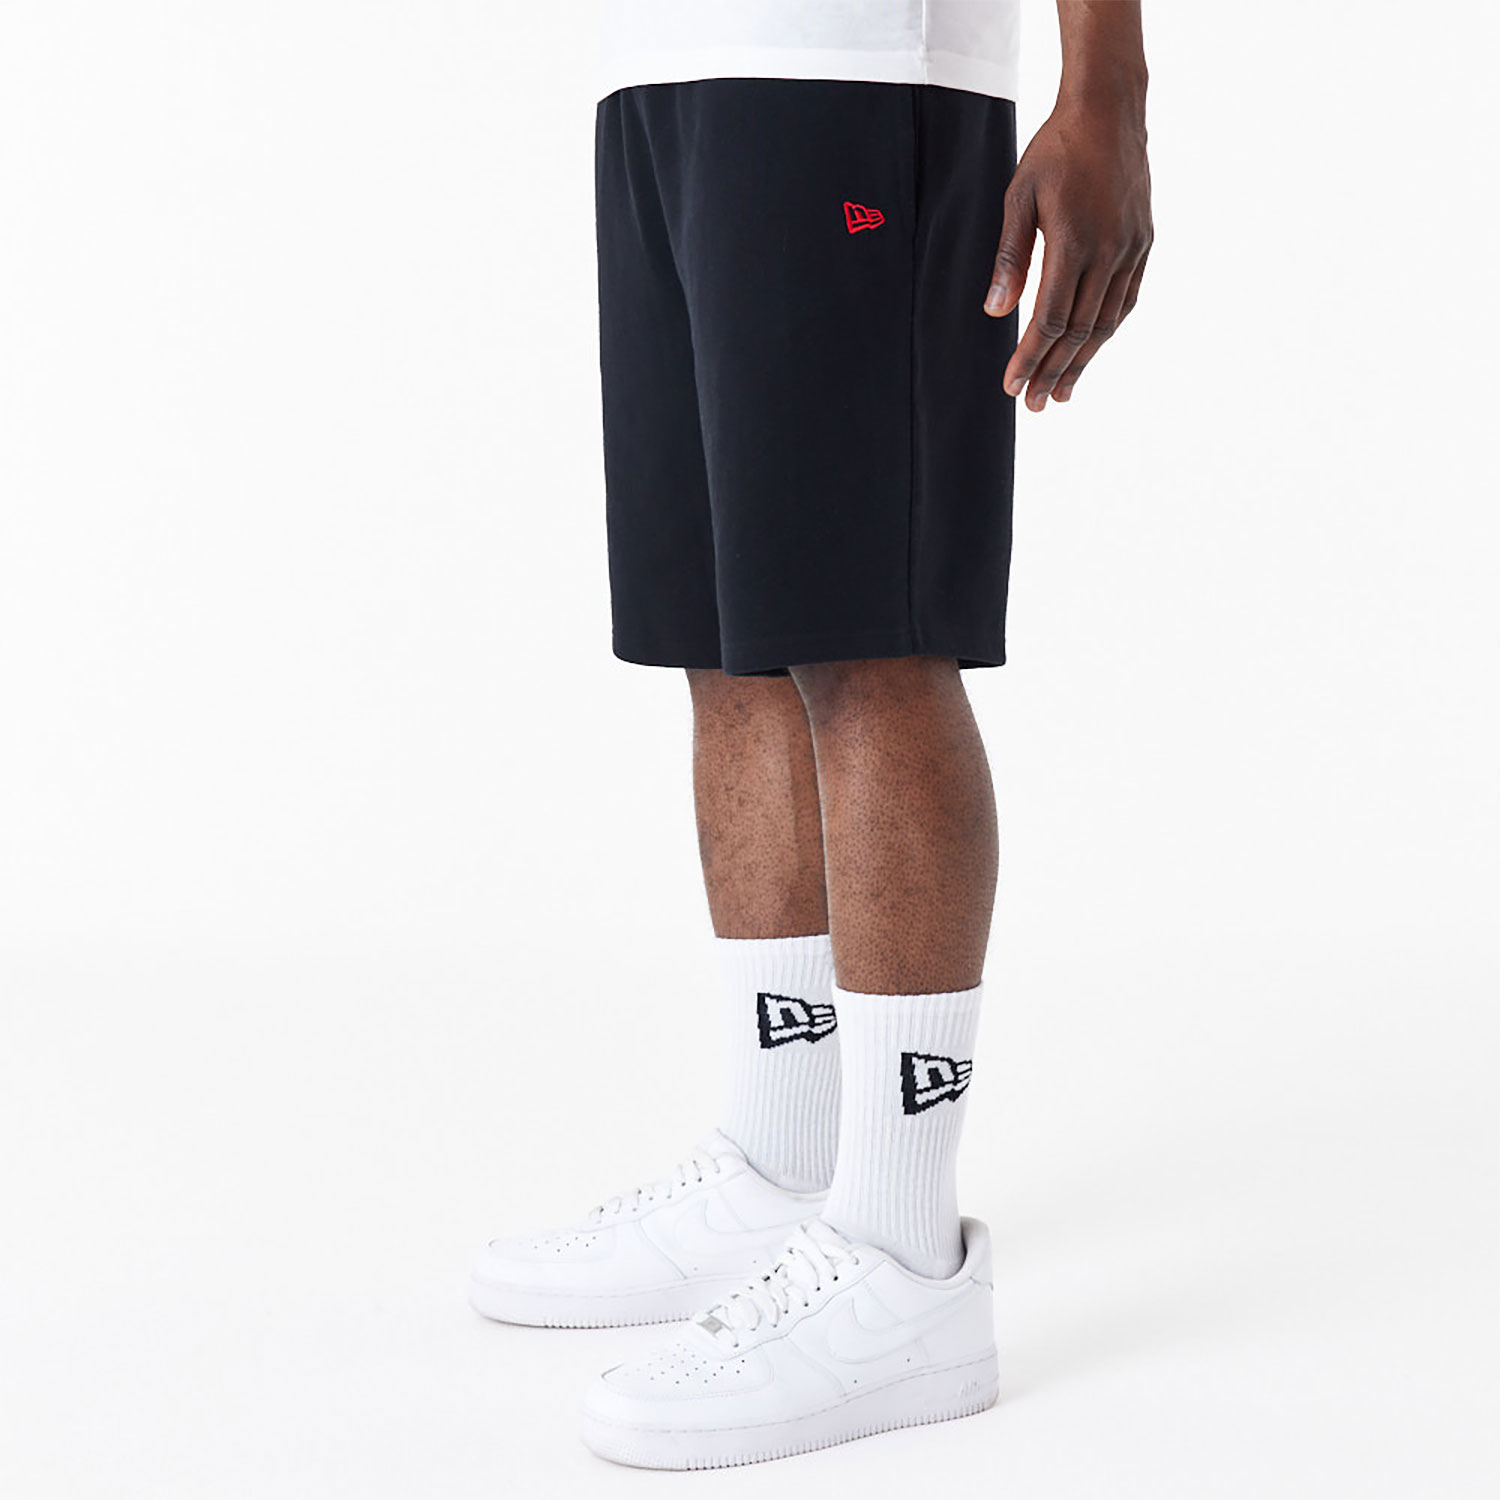 Chicago Bulls NBA Script Black Oversized Shorts